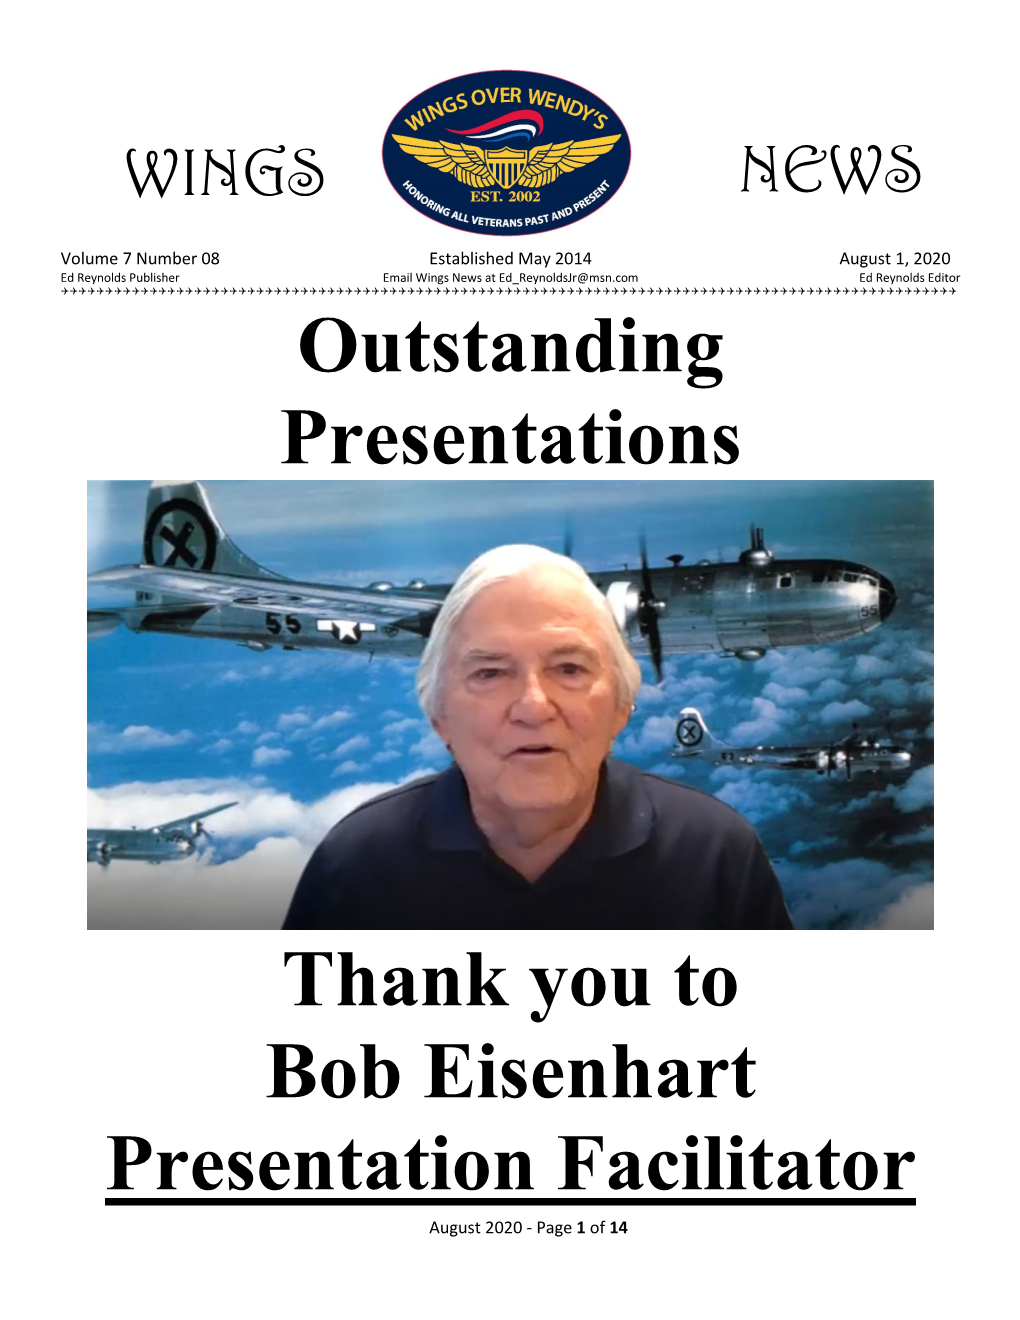 Outstanding Presentations Thank You to Bob Eisenhart Presentation Facilitator